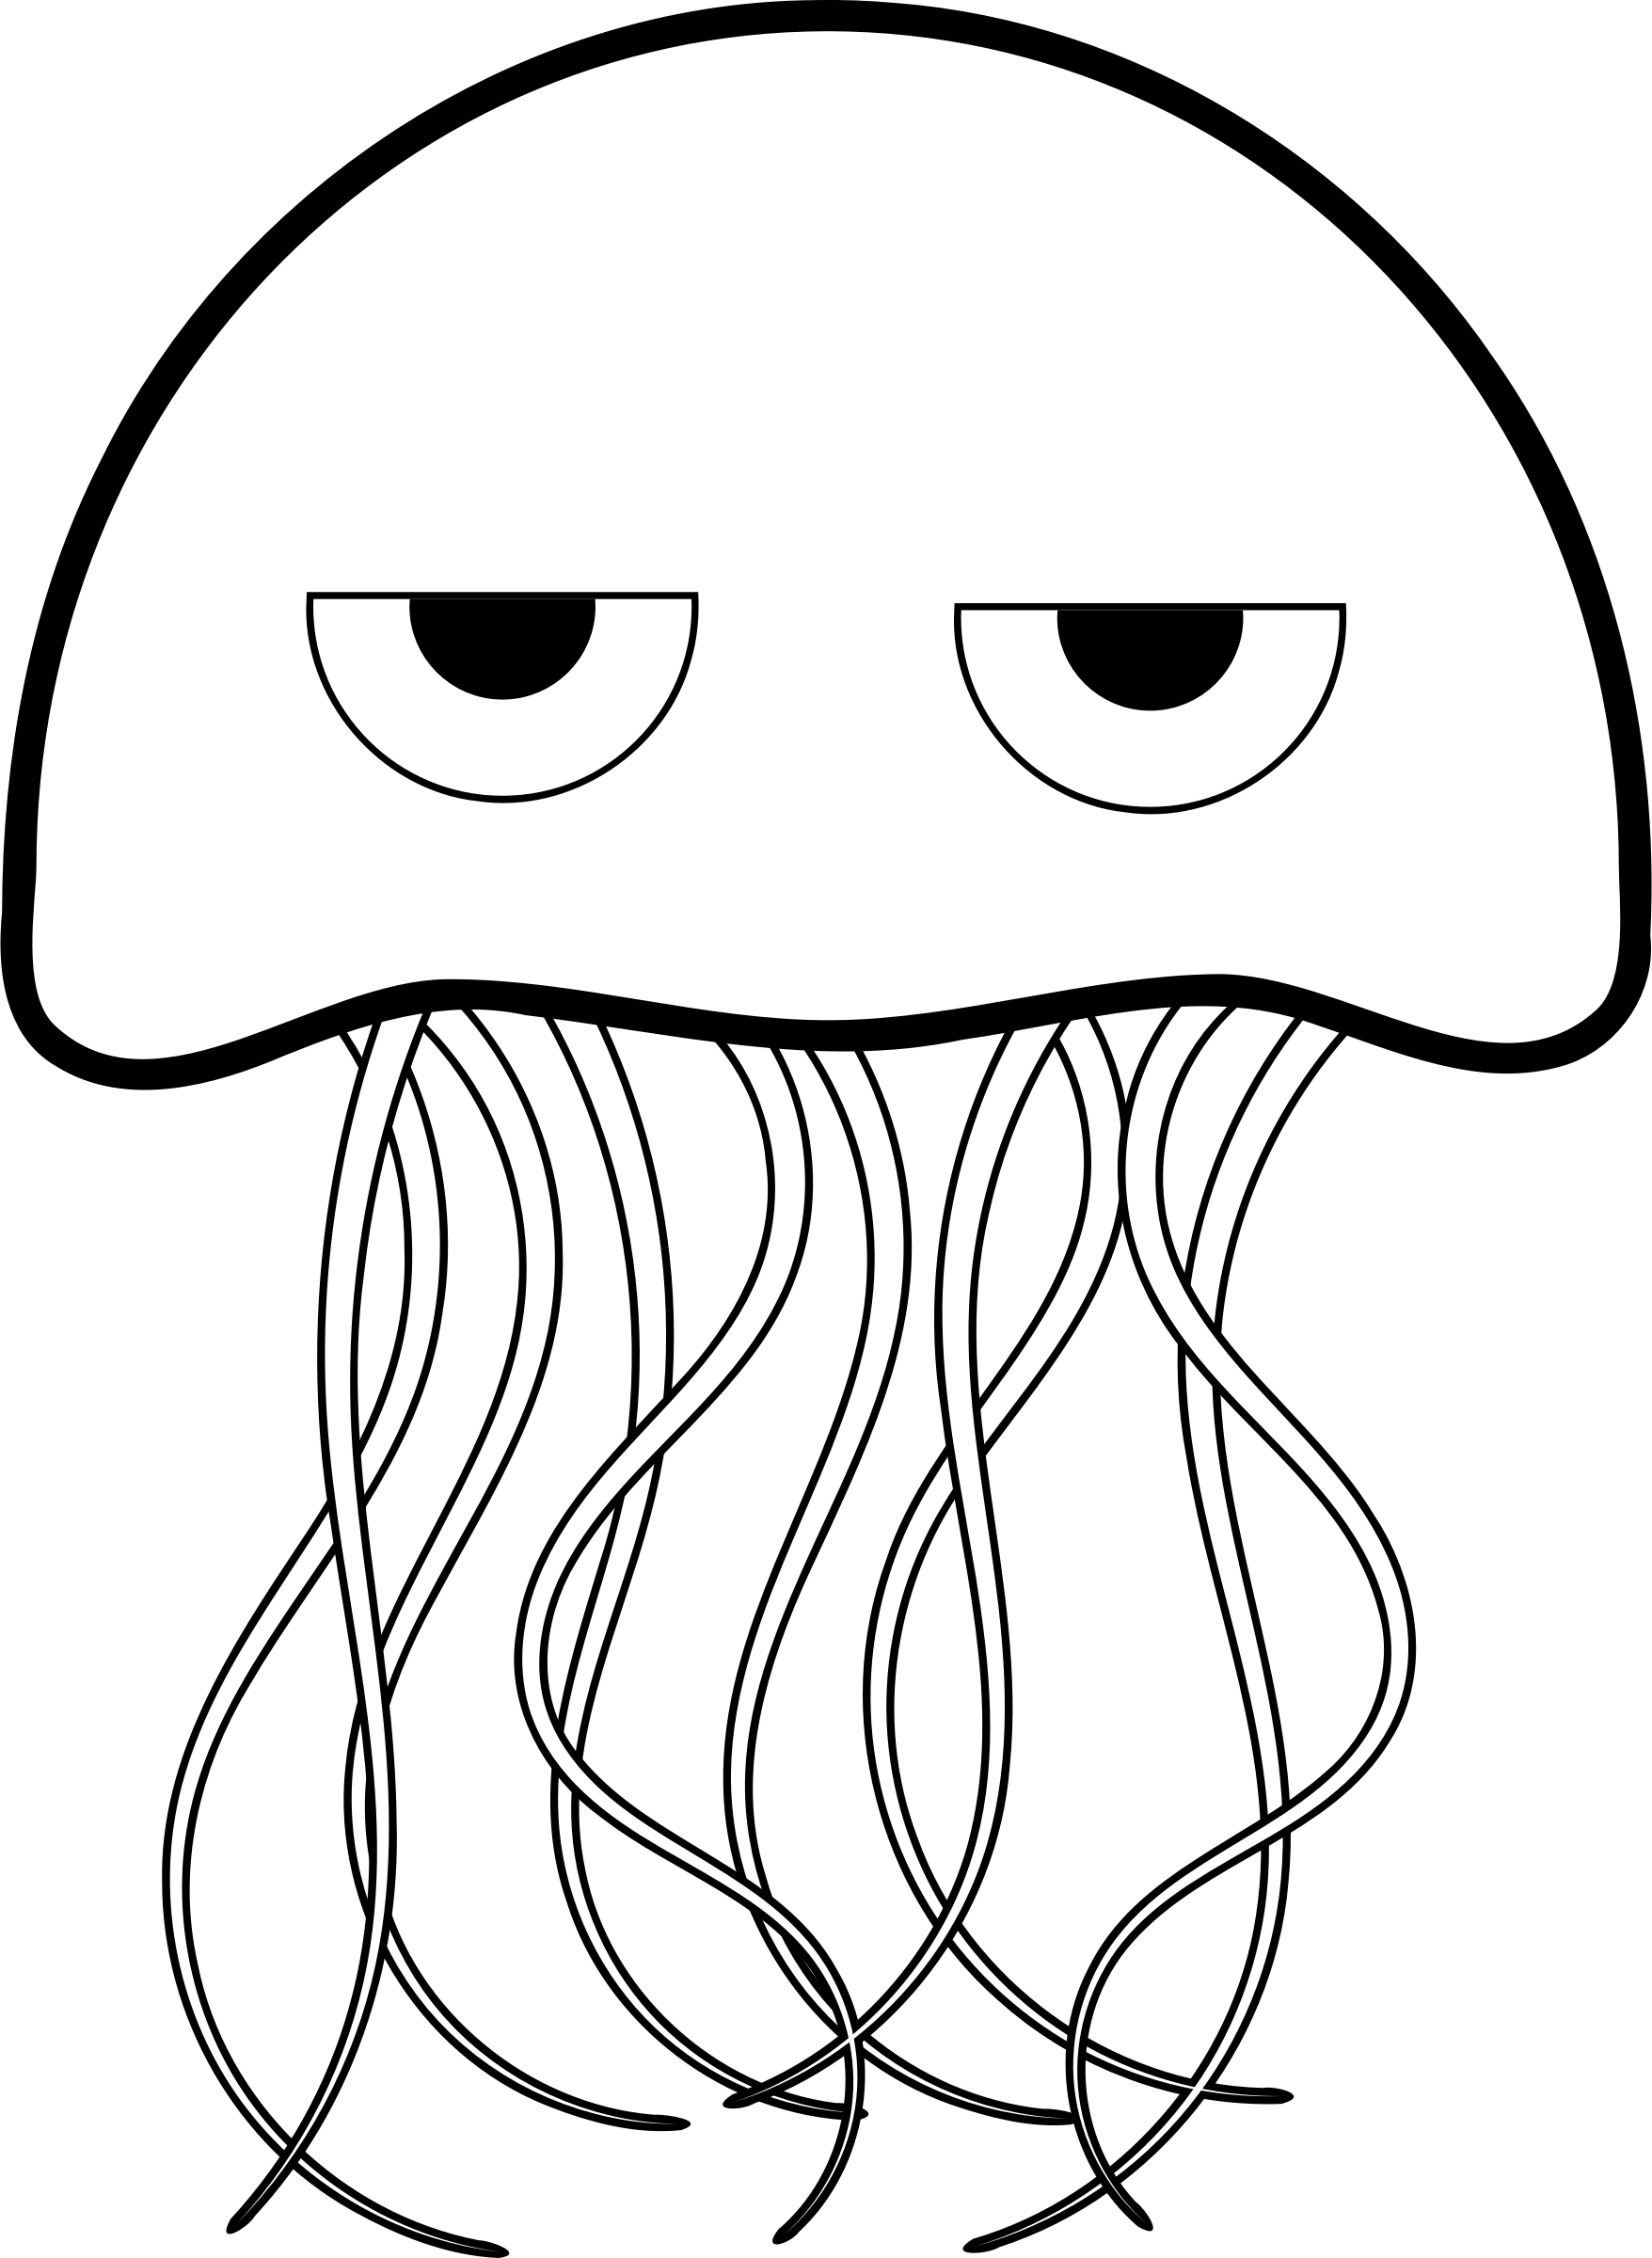 Jellyfish clipart small cartoon. Coloring book big image